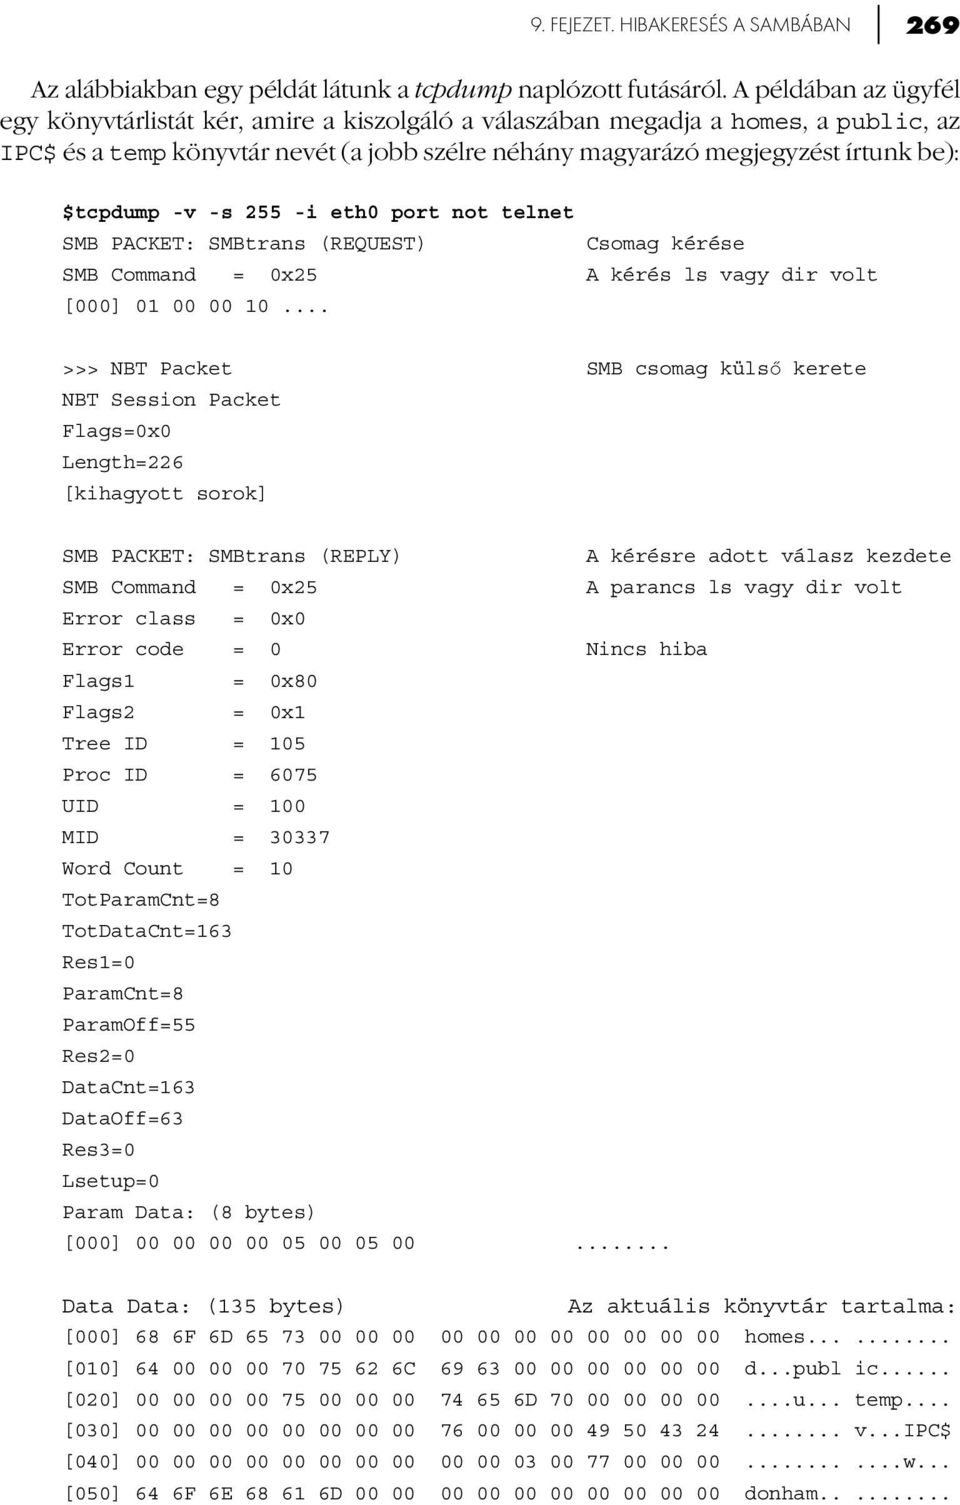 $tcpdump -v -s 255 -i eth0 port not telnet SMB PACKET: SMBtrans (REQUEST) Csomag kérése SMB Command = 0x25 A kérés ls vagy dir volt [000] 01 00 00 10.